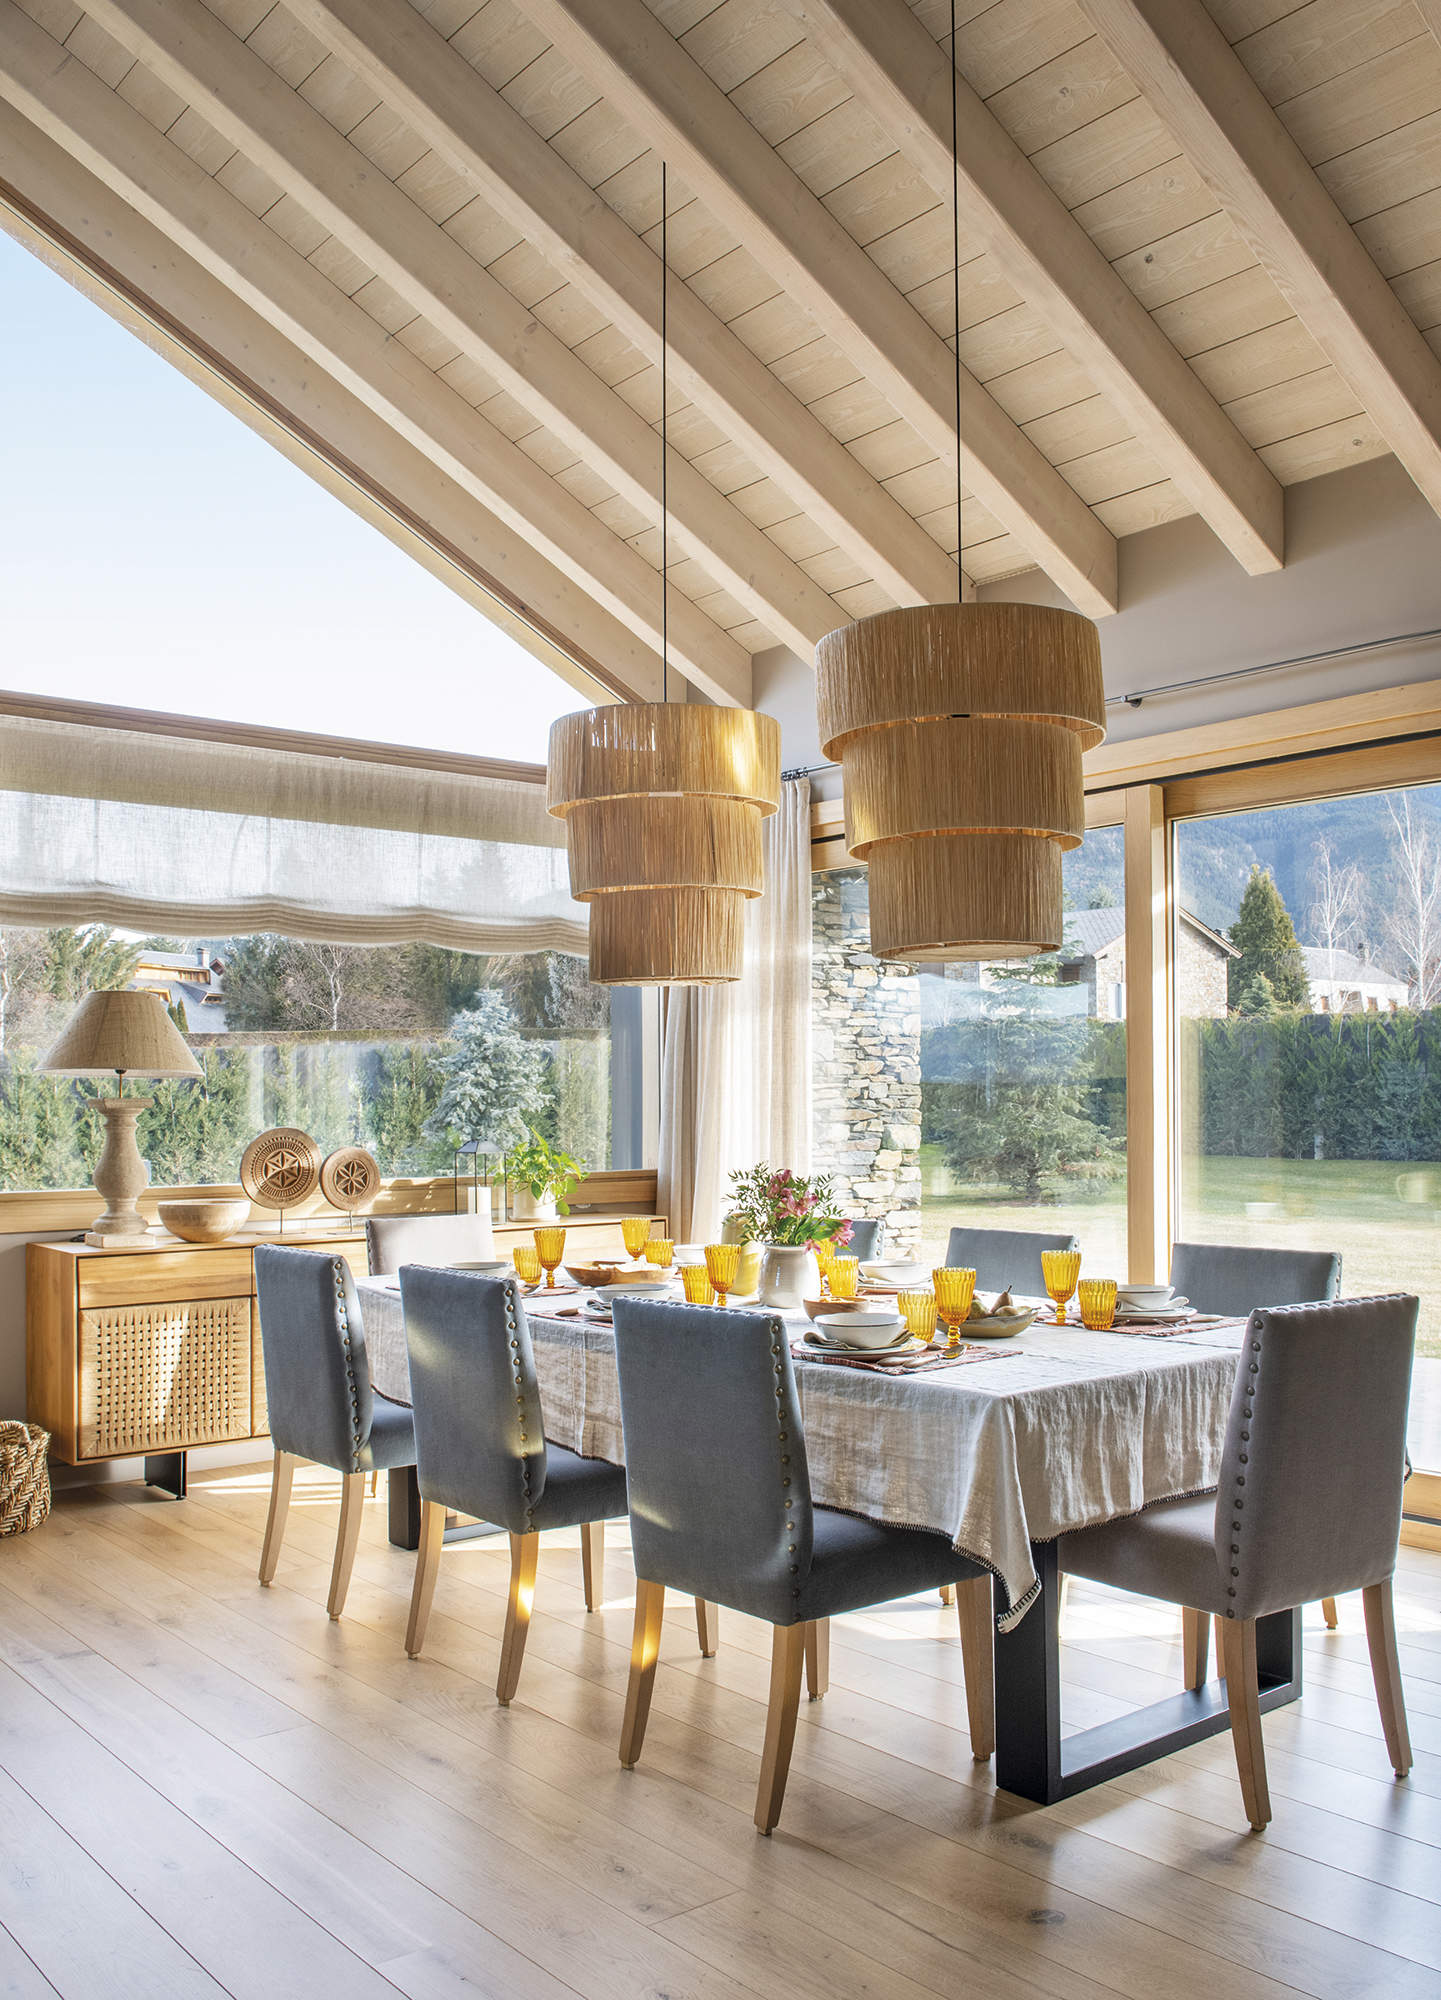 comedor, mesa con mantel con sillas tapizadas color gris, lámparas de techo de fibra, aparador con lámpara de mesa, suelo de madera, techo con vigas